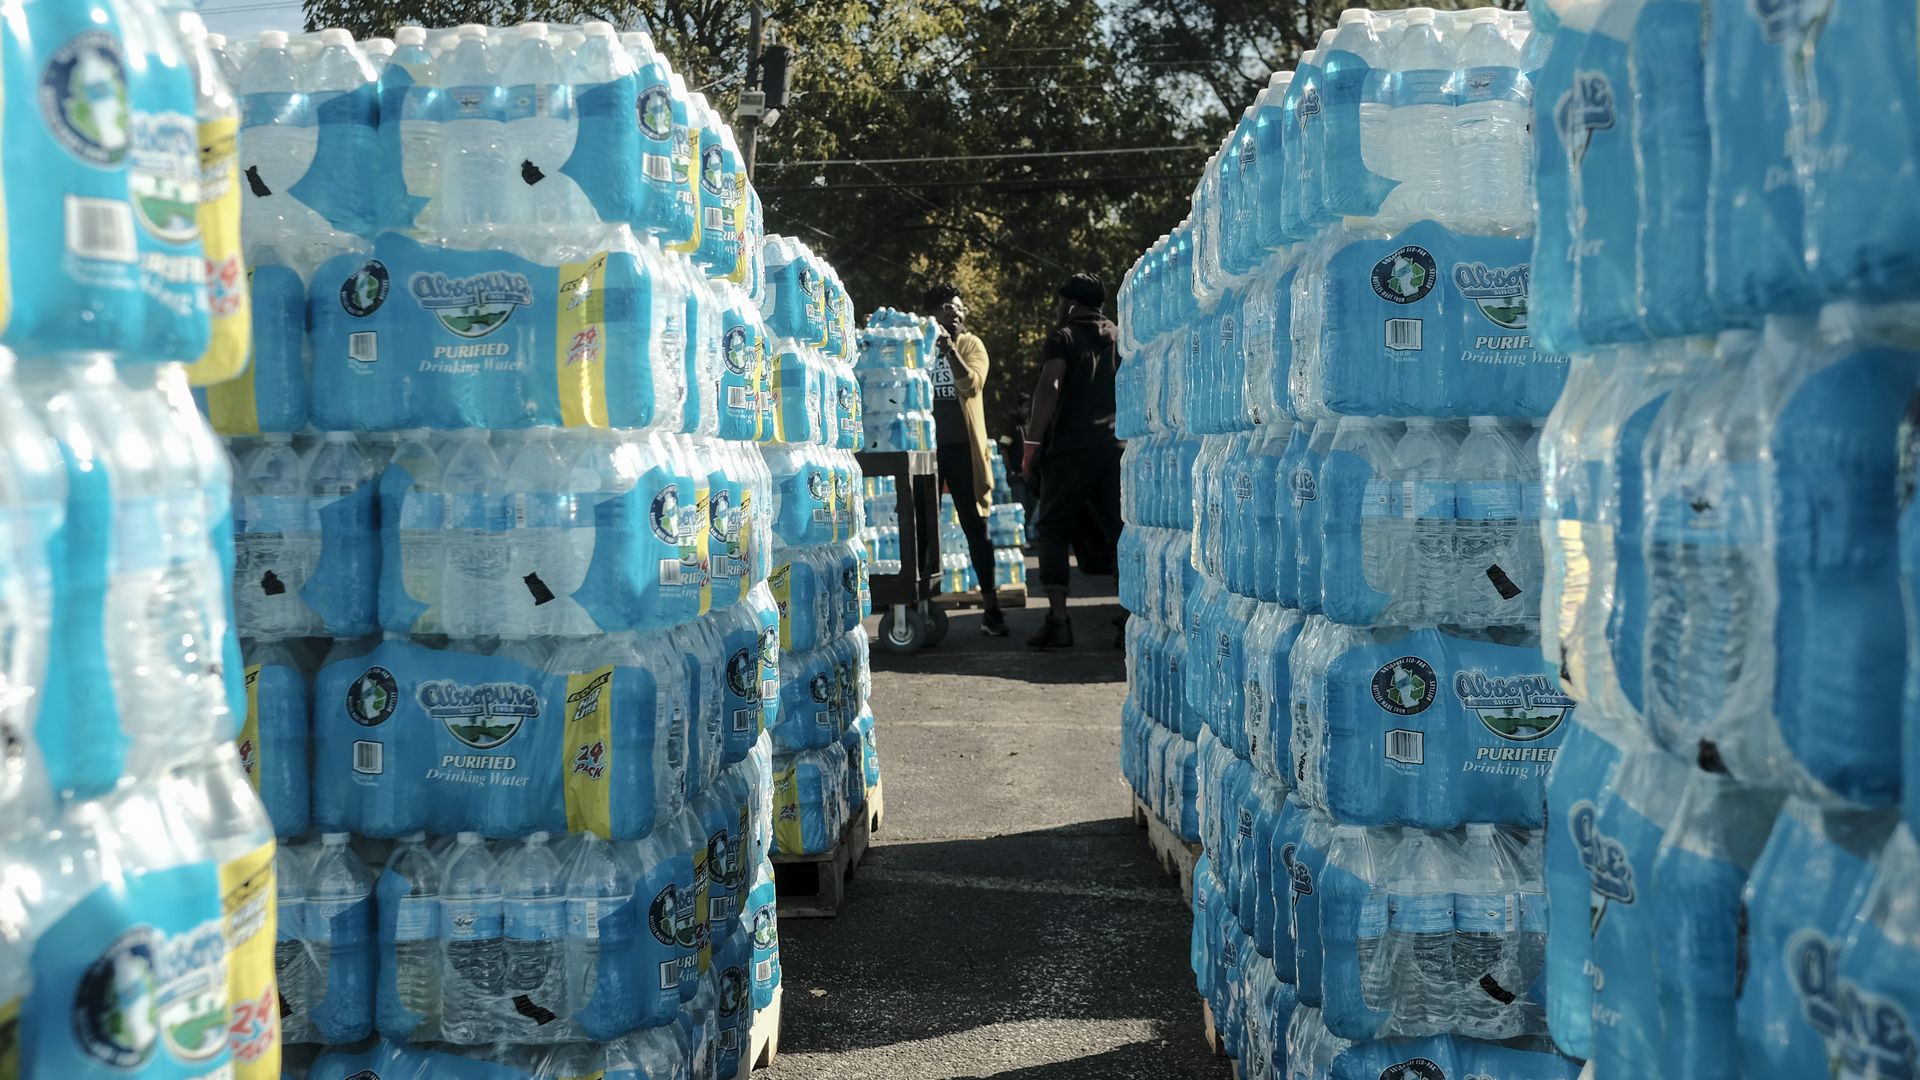 Volunteers distribute bottled water to residents